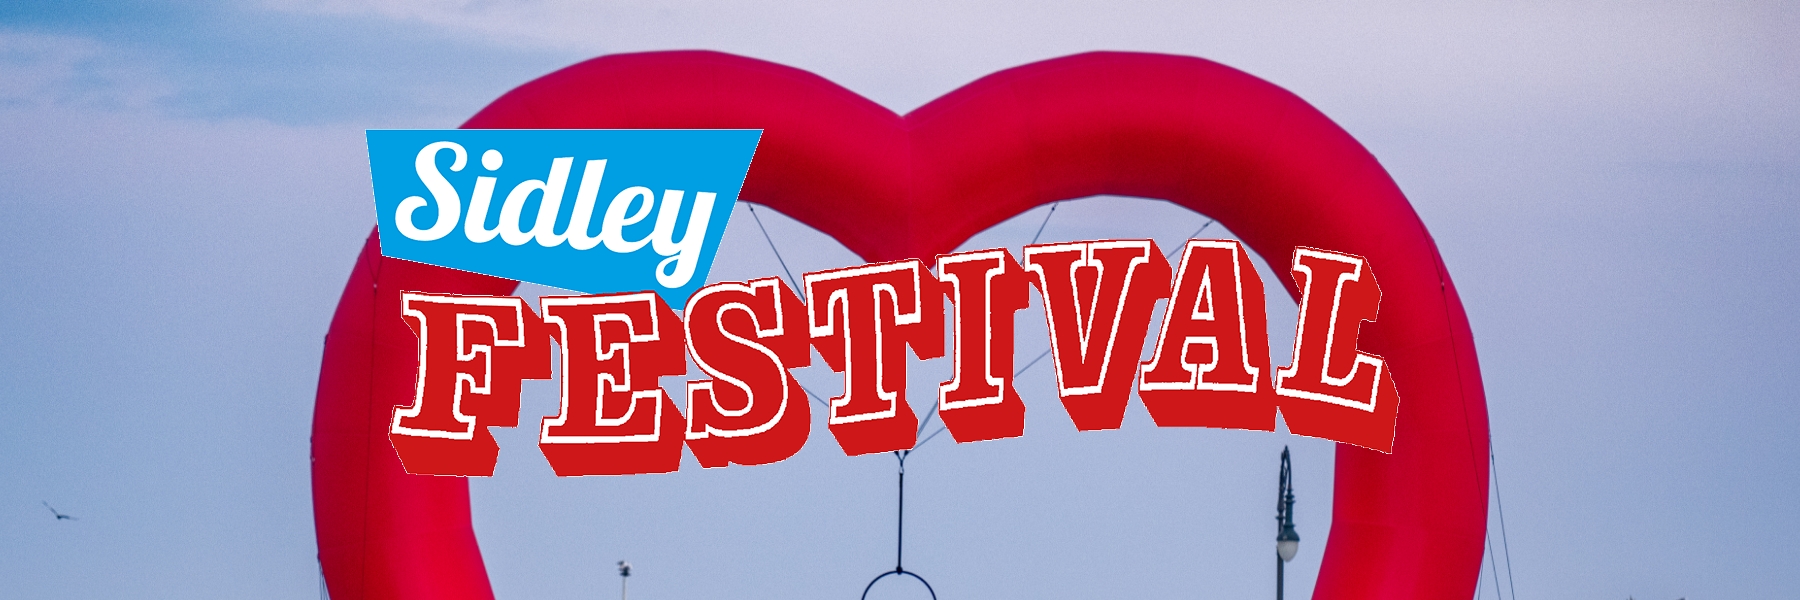 Sidley Fest banner